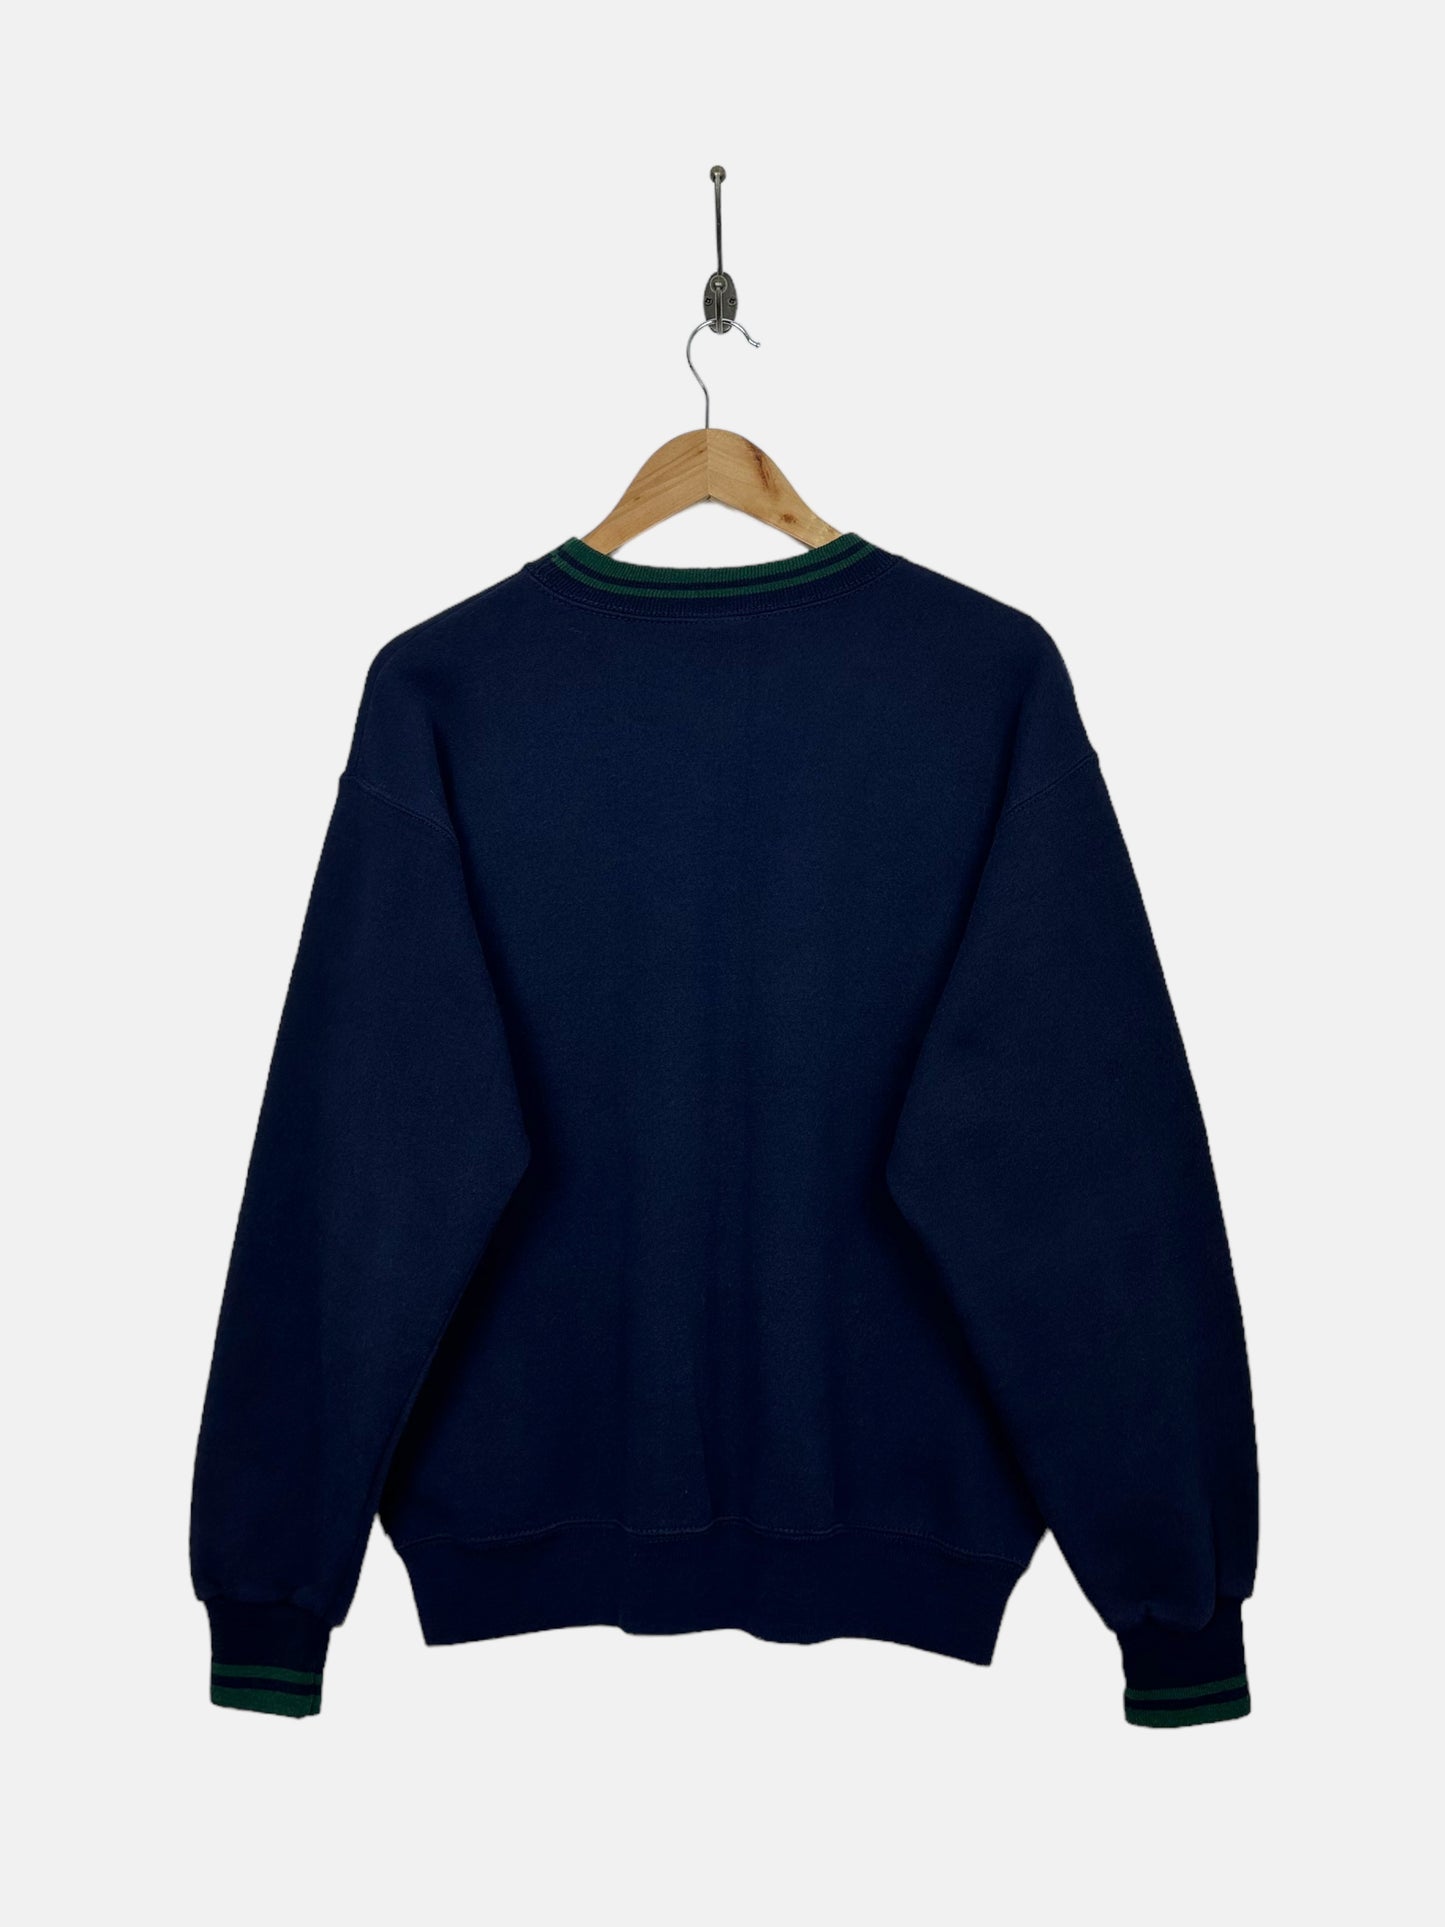 90's Massachusetts University USA Made Vintage Sweatshirt Size 10